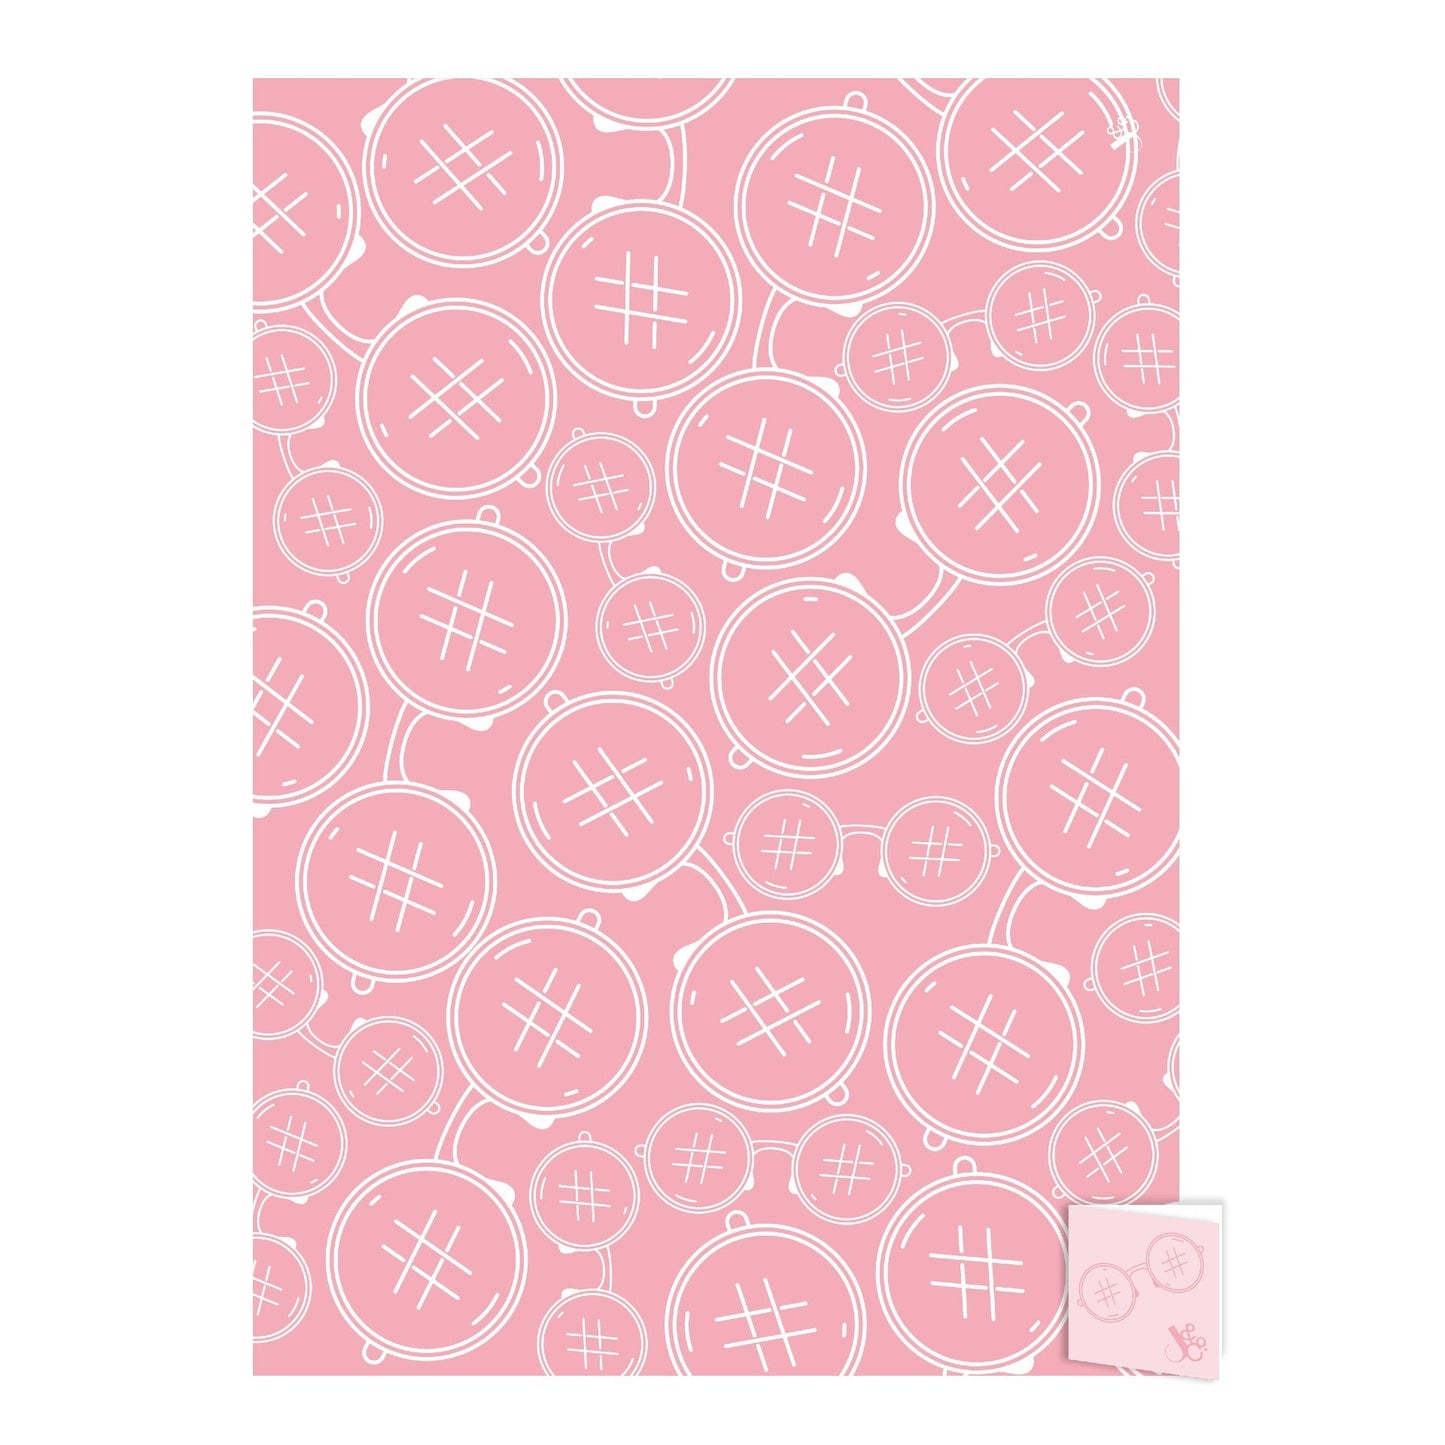 Memorra Gift Wrapper -  Rose-Tinted Pink